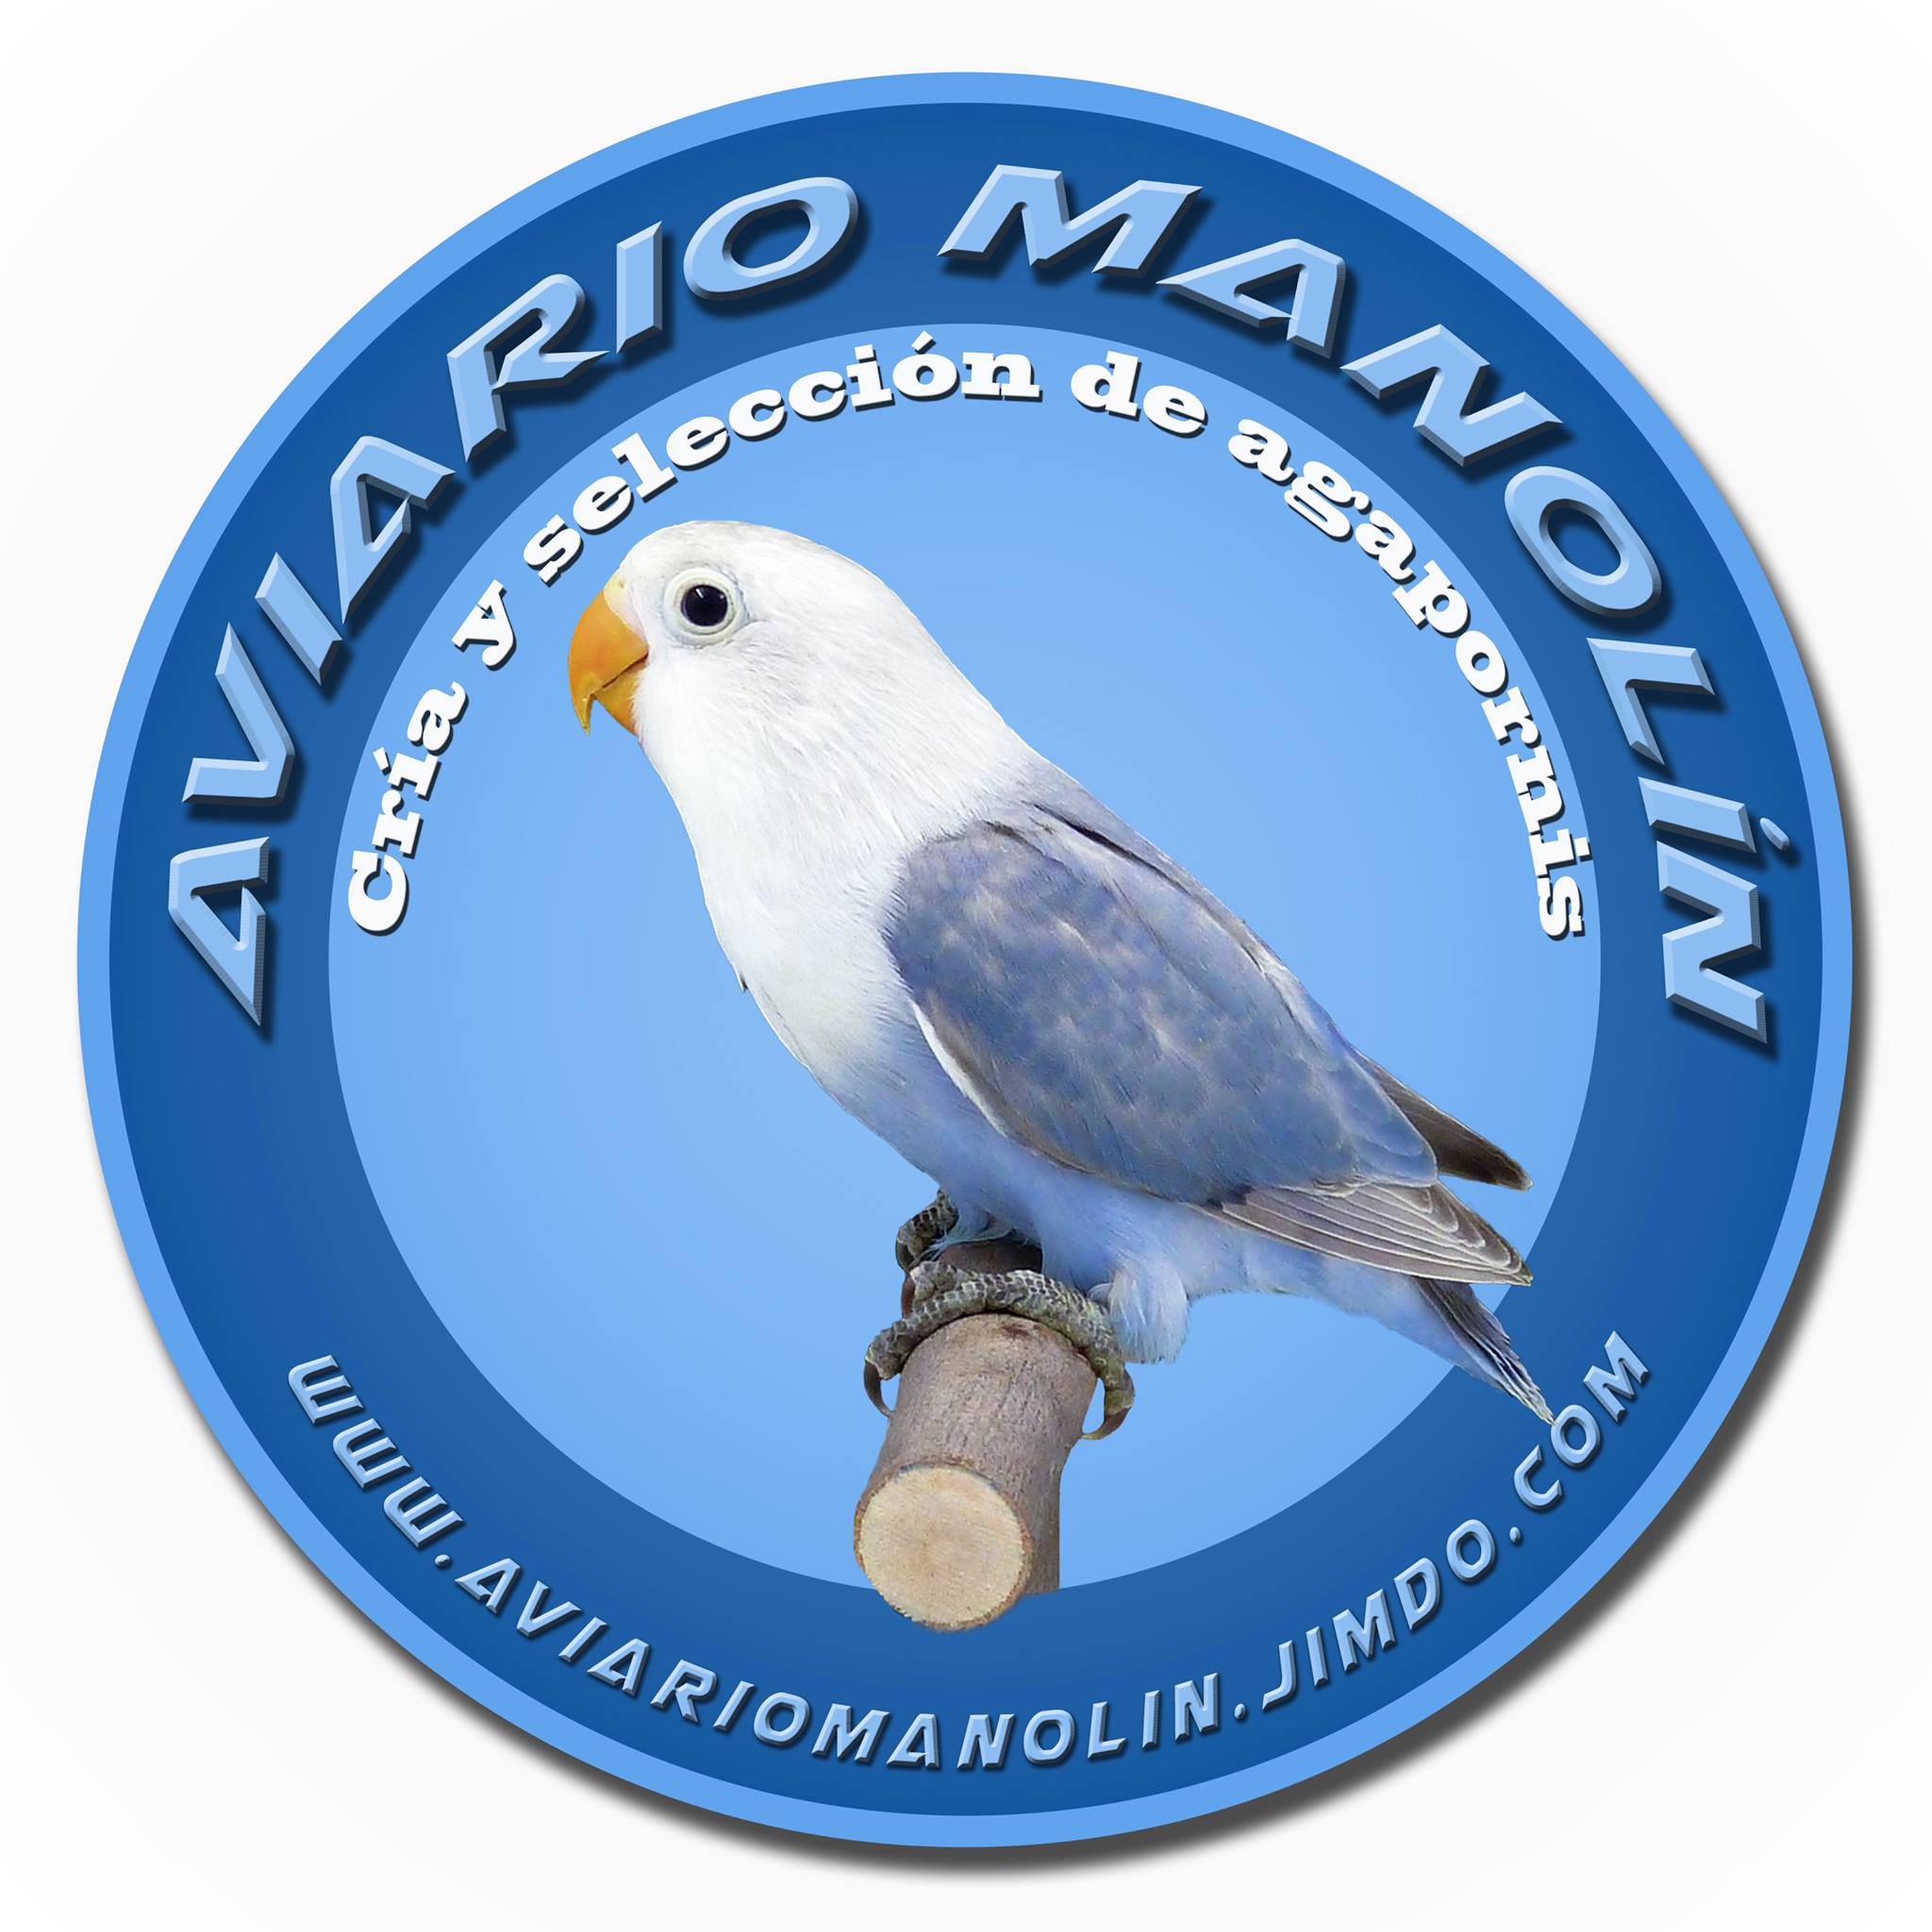 Aviario Manolín Cria y selección de agapornis